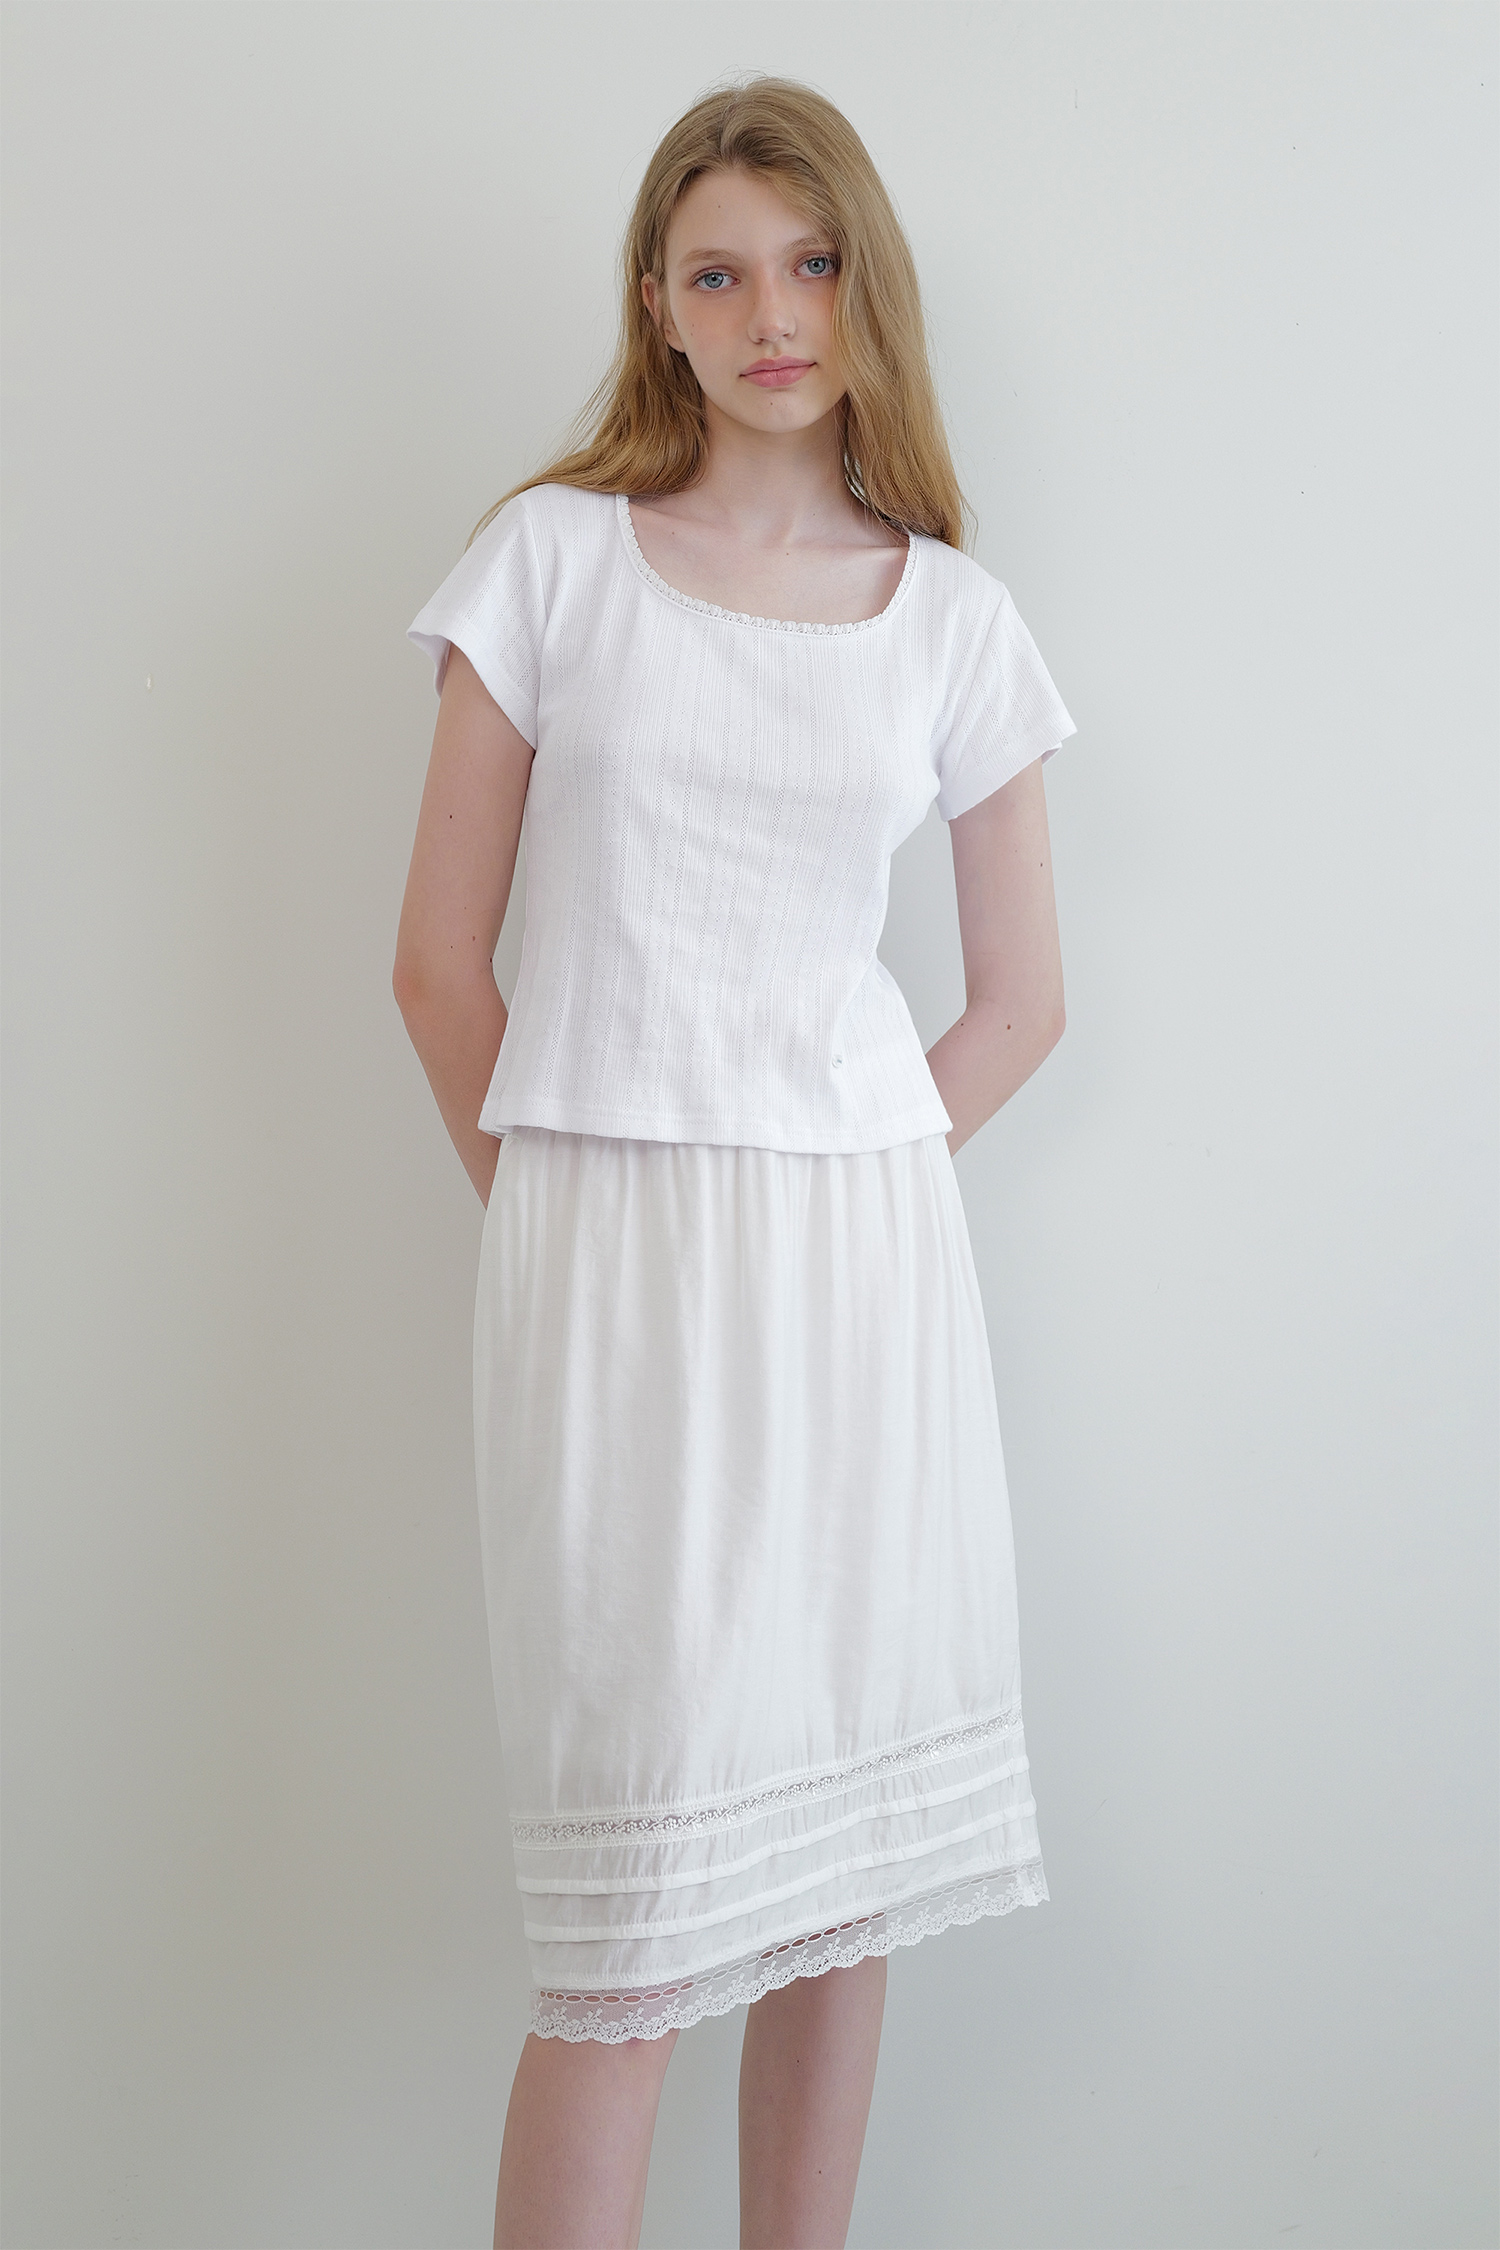 Rose lace skirt (white)